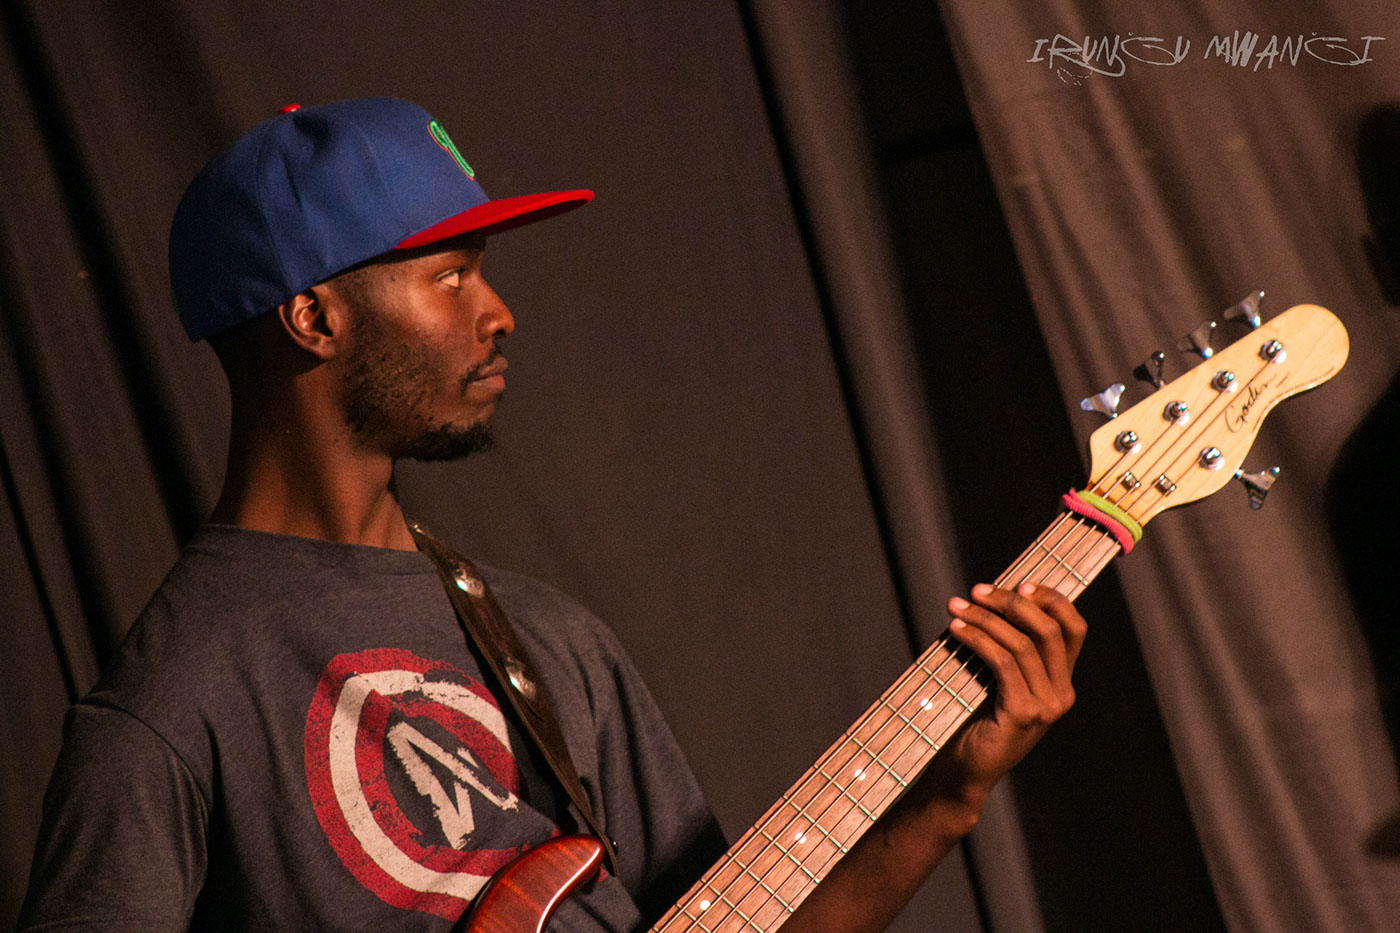 concertphotography eventsphotography bass bassman guitars jazz africanmusic